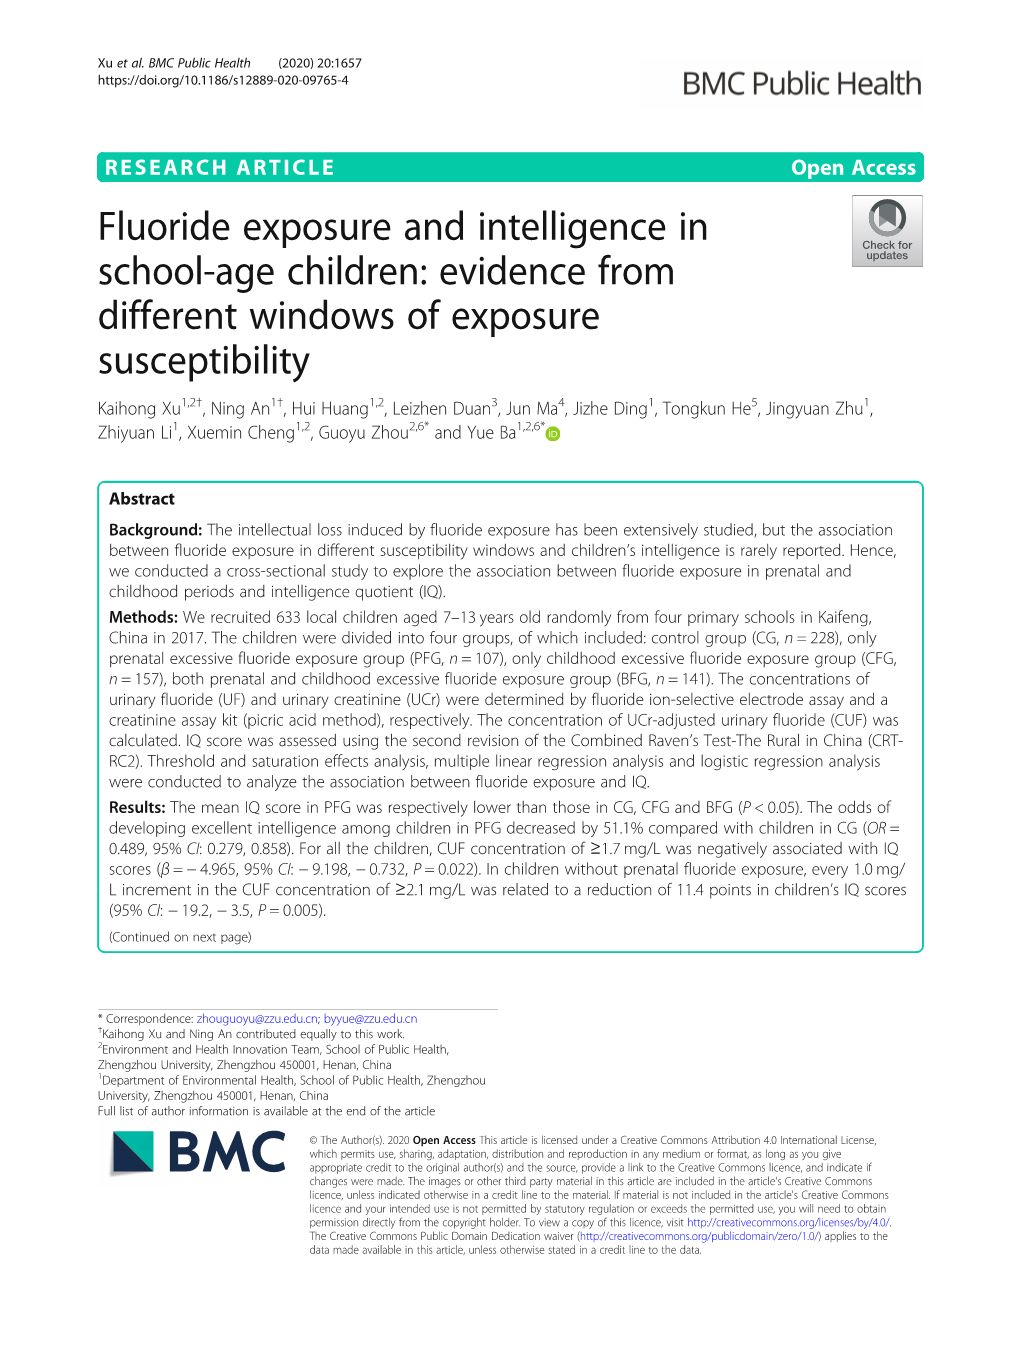 Fluoride Exposure and Intelligence in School-Age Children